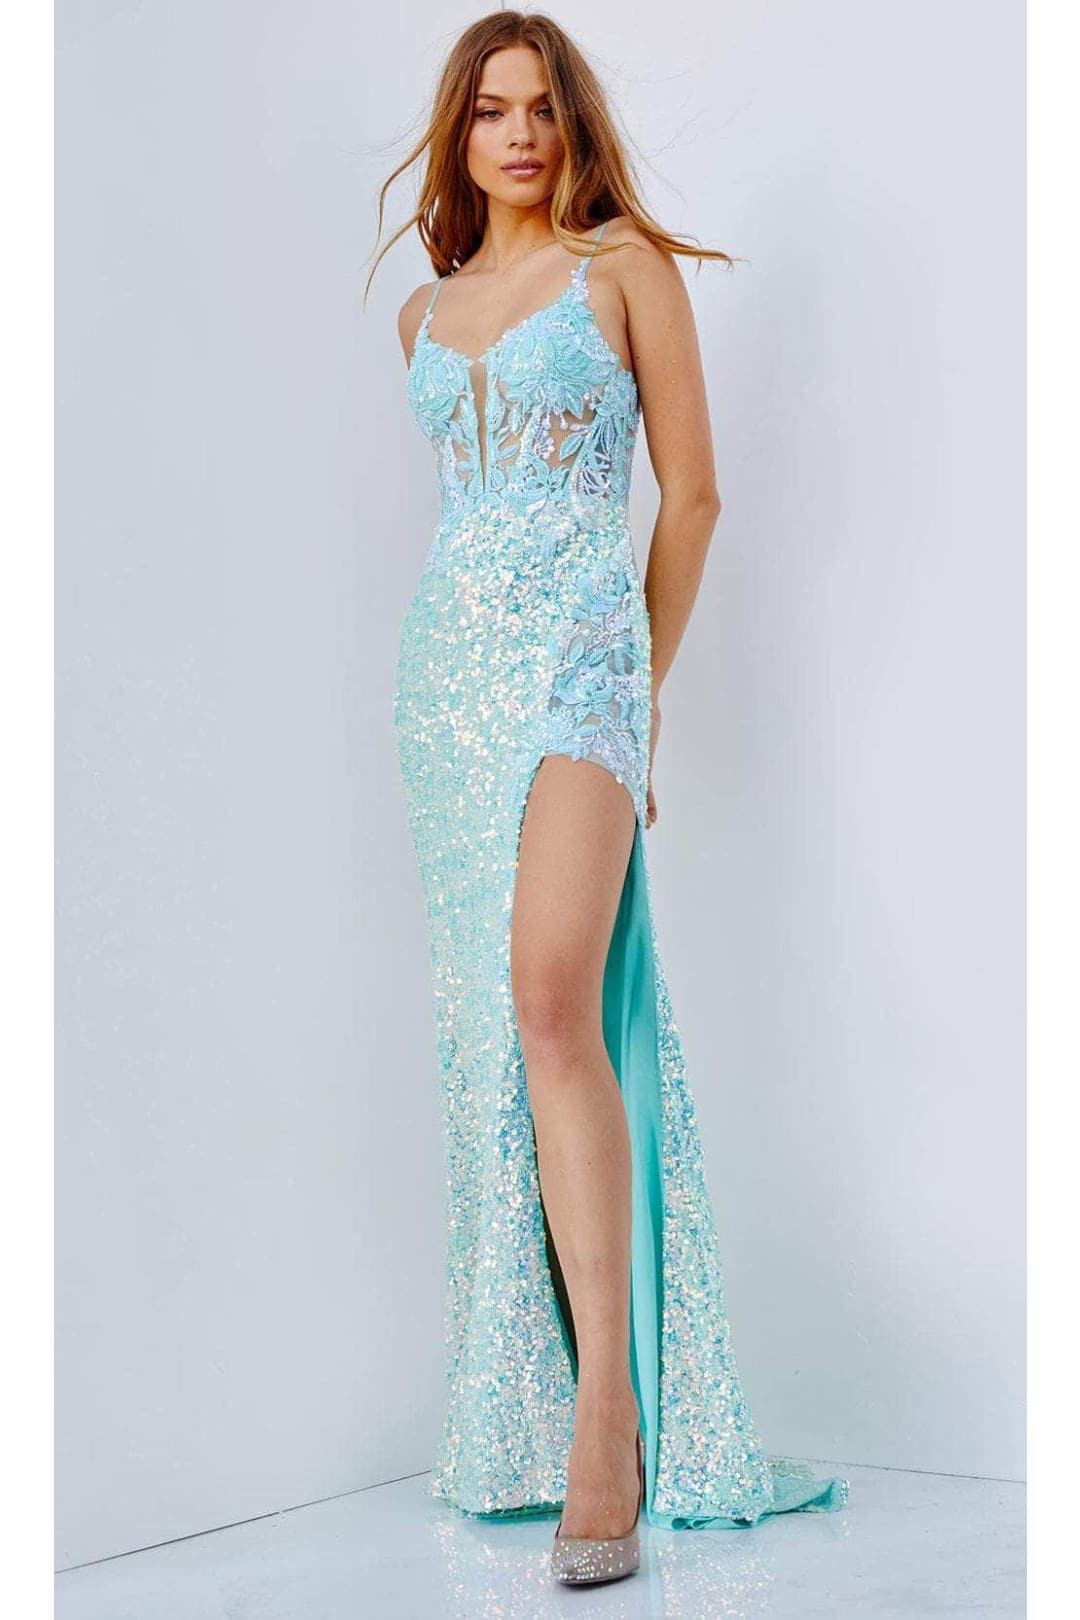 JVN by Jovani JVN24299 Beaded Sheer Bustier Inspired Bodice Prom Evening Gown - AQUA